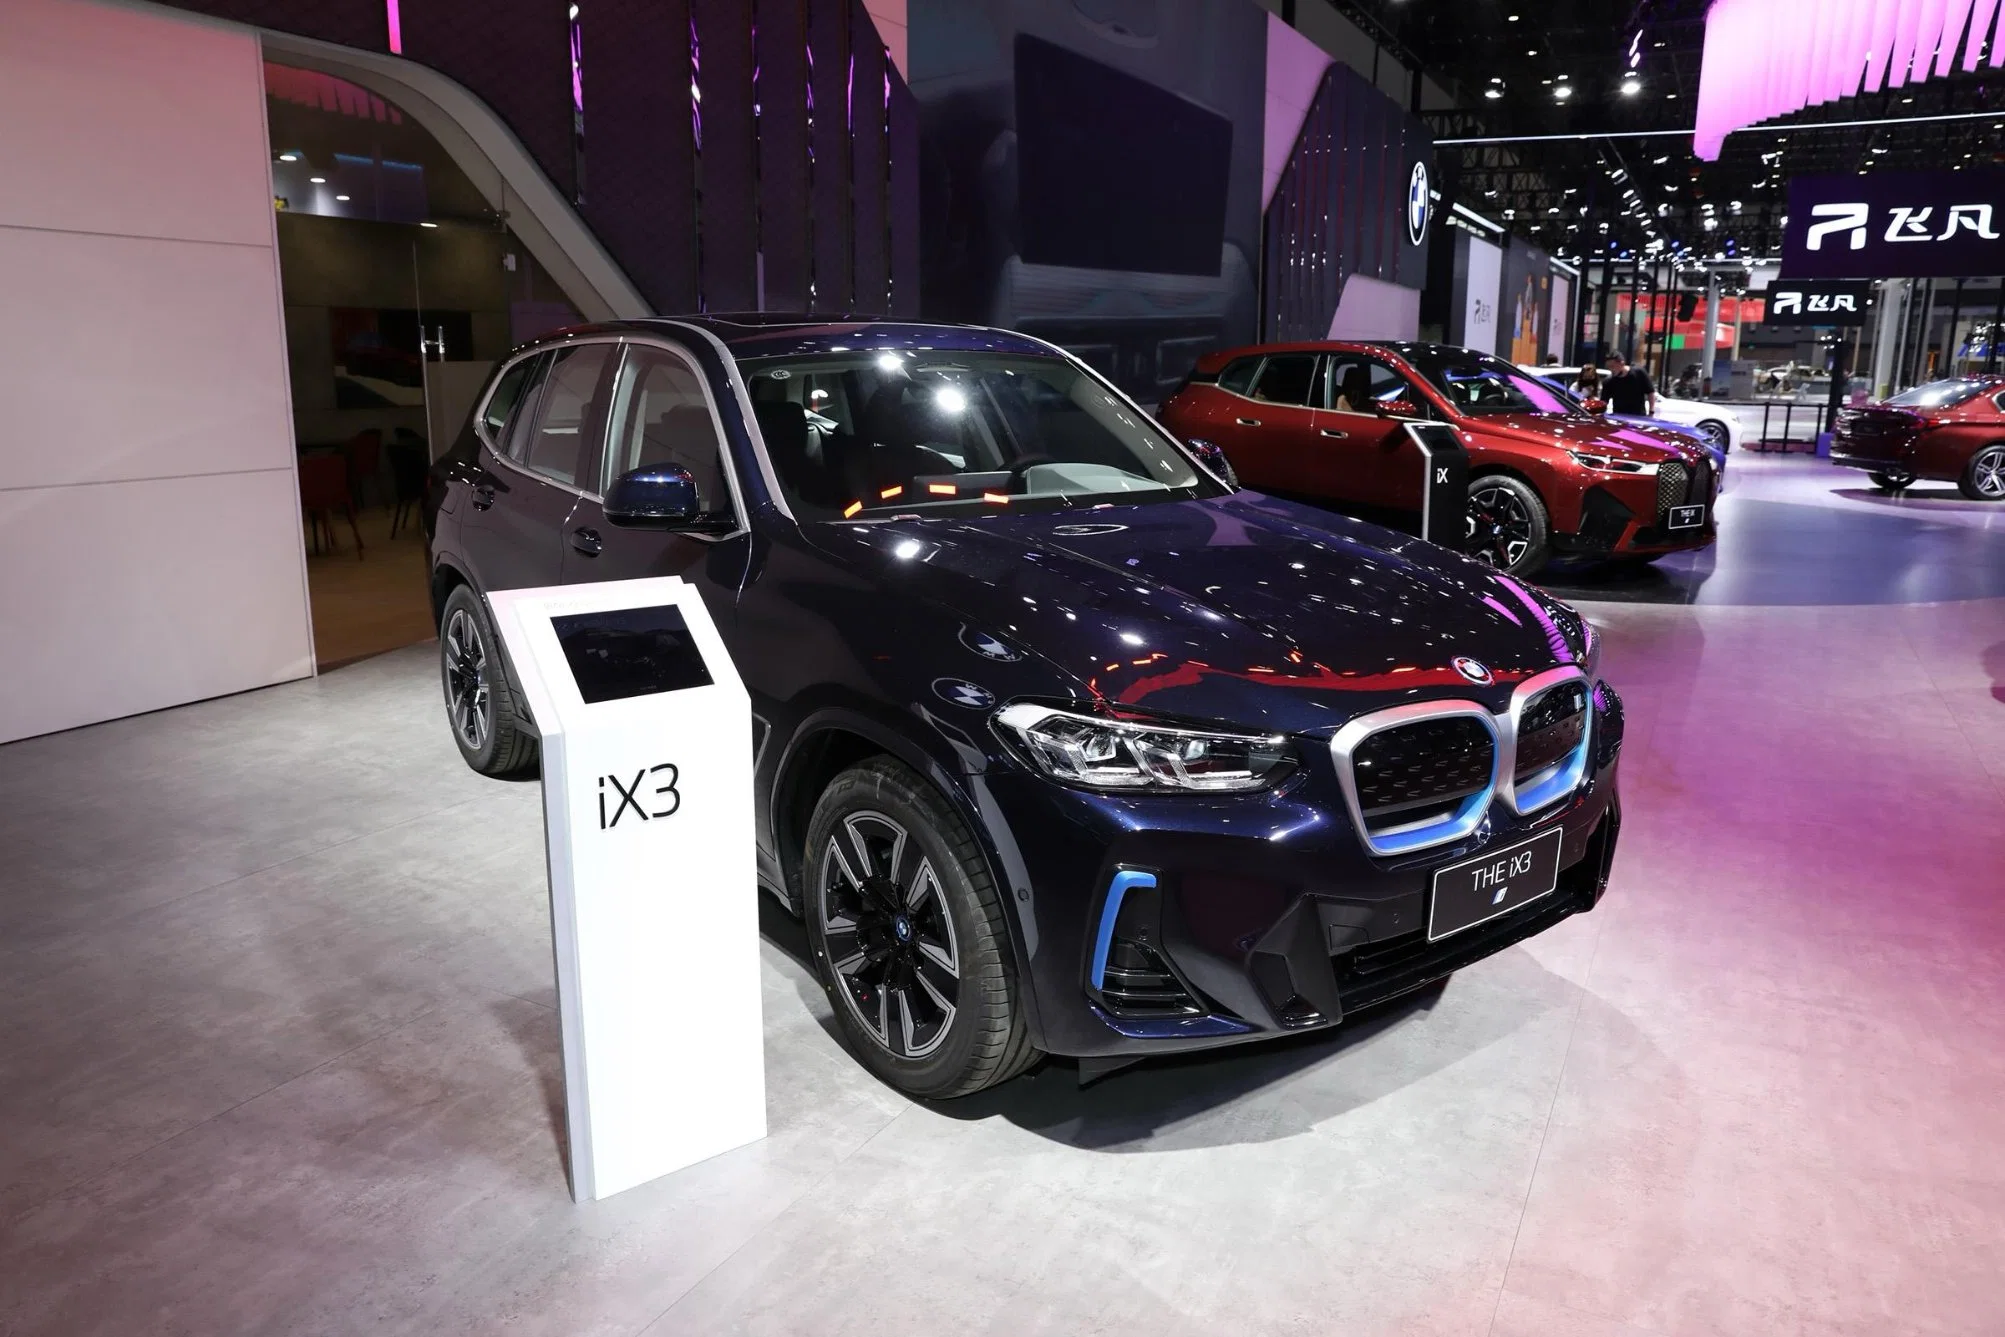 BMW IX3 Energy Electric Vehicle Pure Electric Edrive 550km Luxury SUV EV Car Used